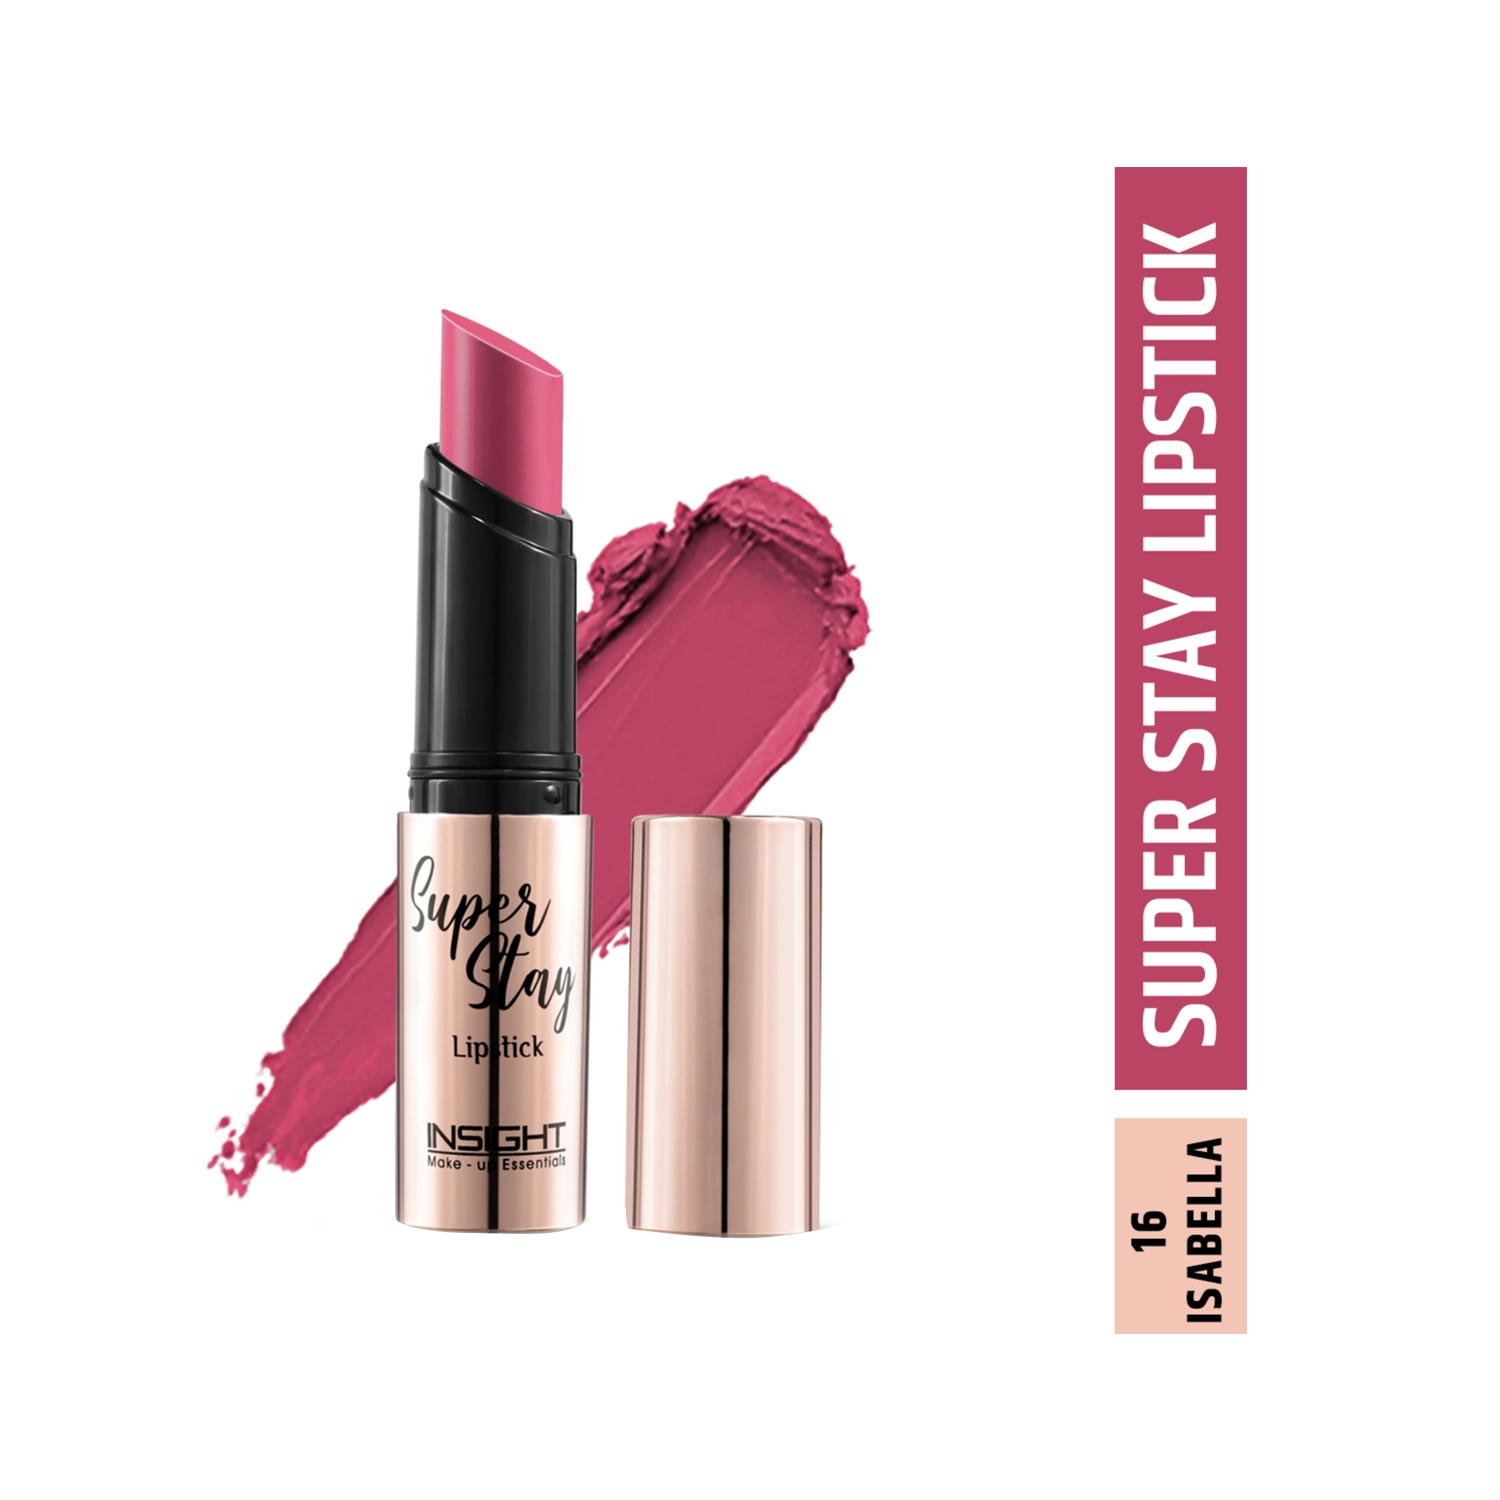 Insight Cosmetics | Insight Cosmetics Super Stay Lipstick - 16 Isabella (7g)